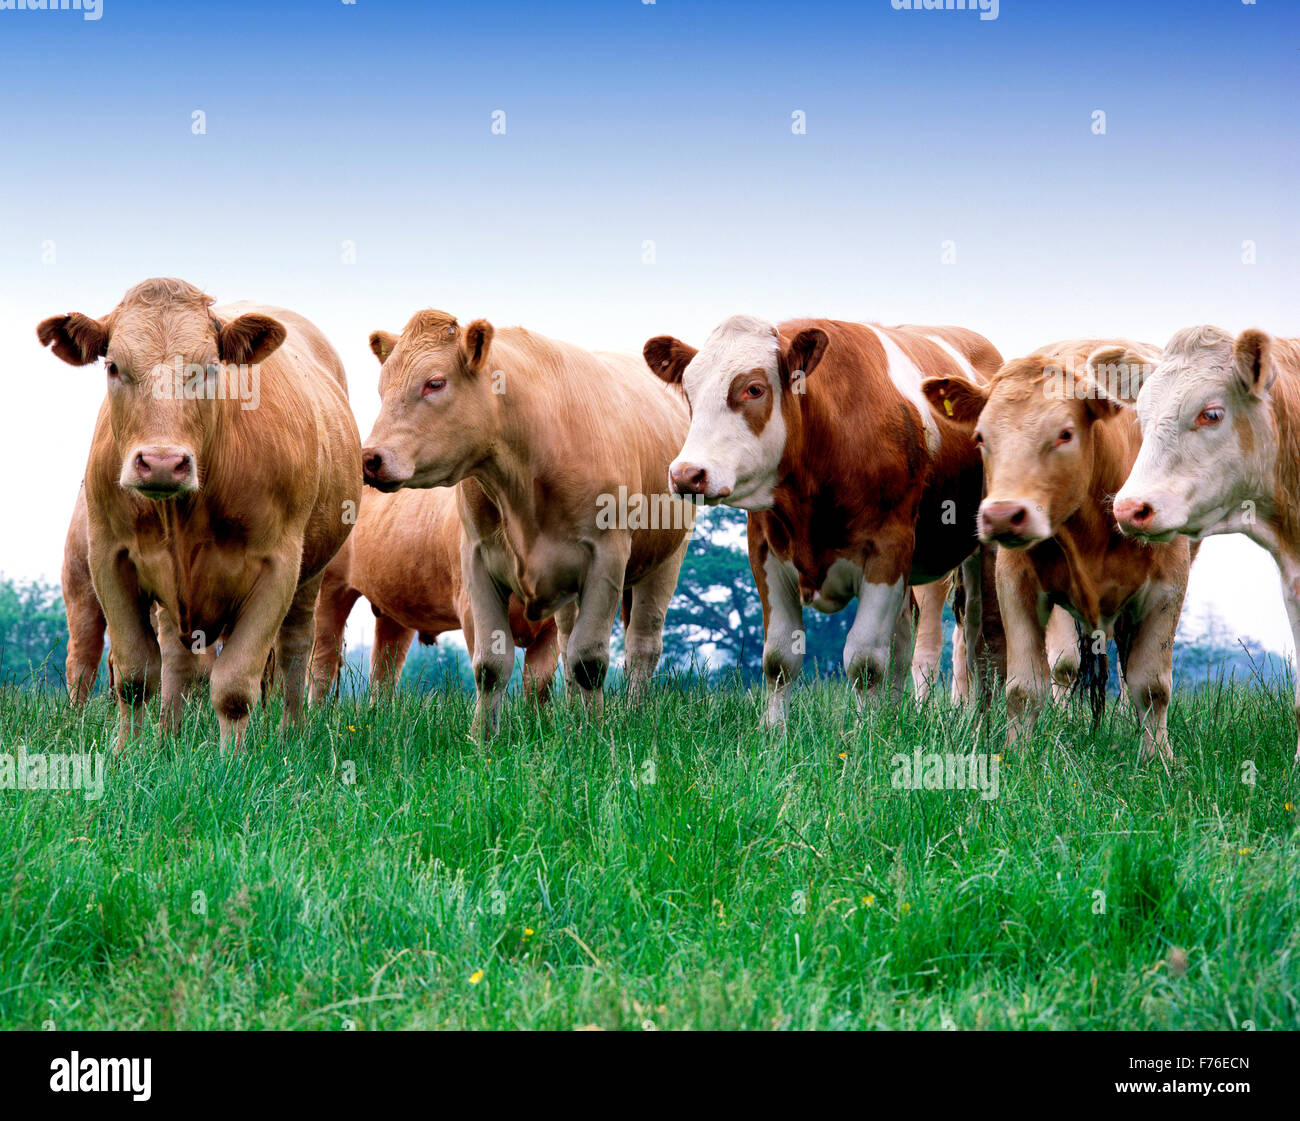 Beef Cattle in field Stock Photo